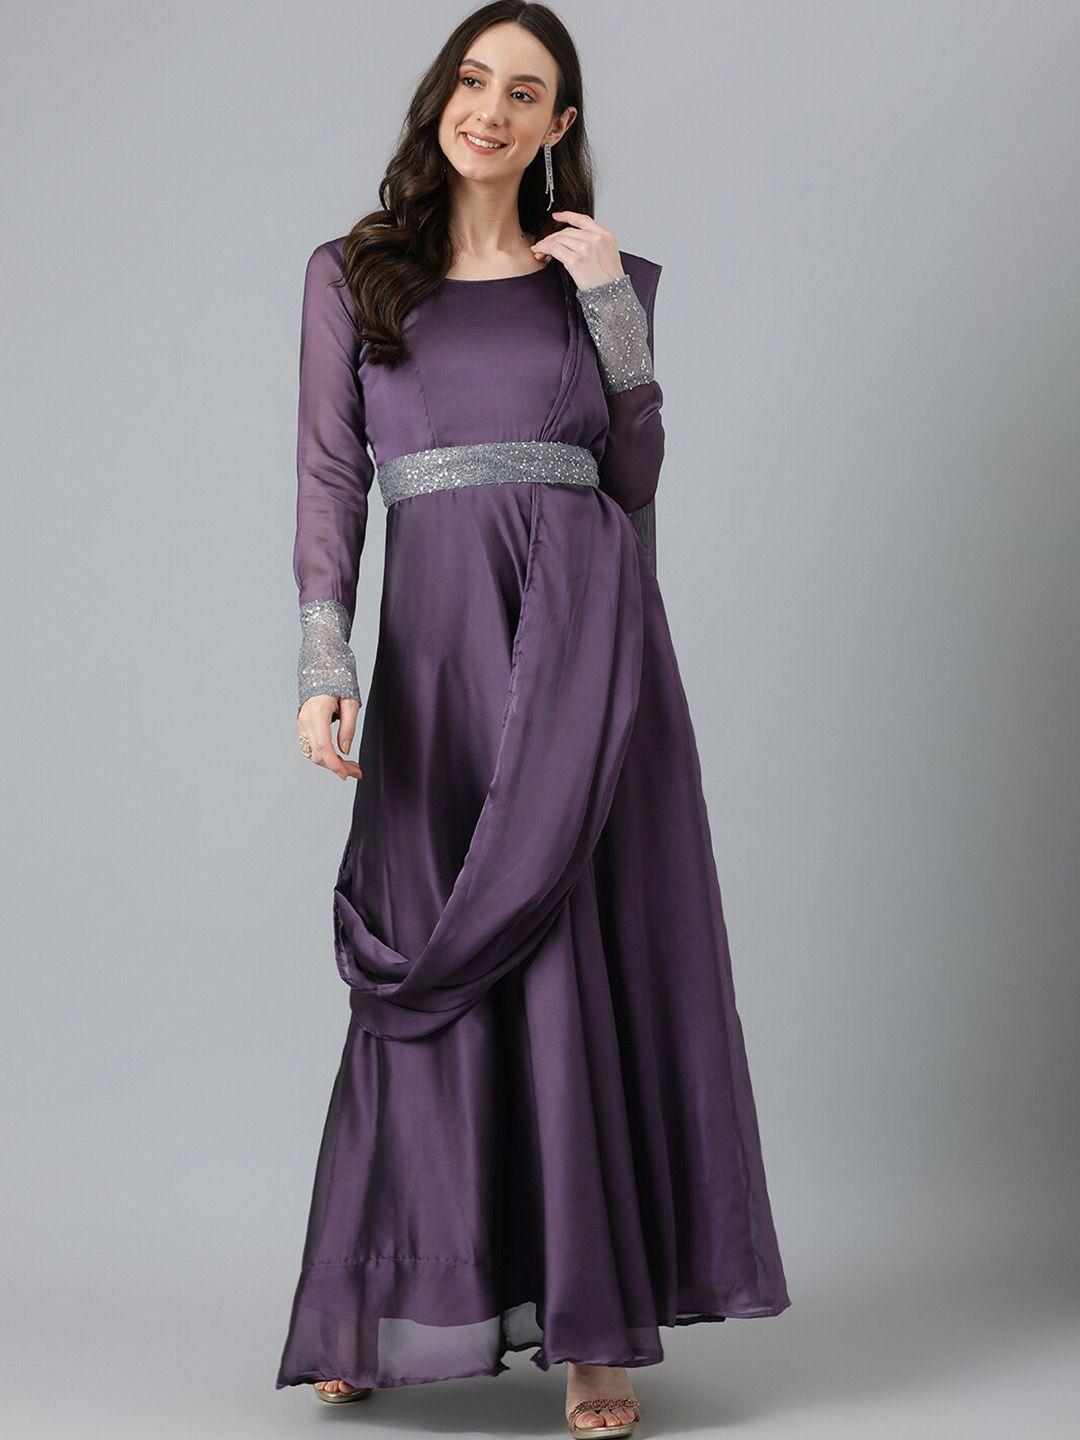 vinya purple dress